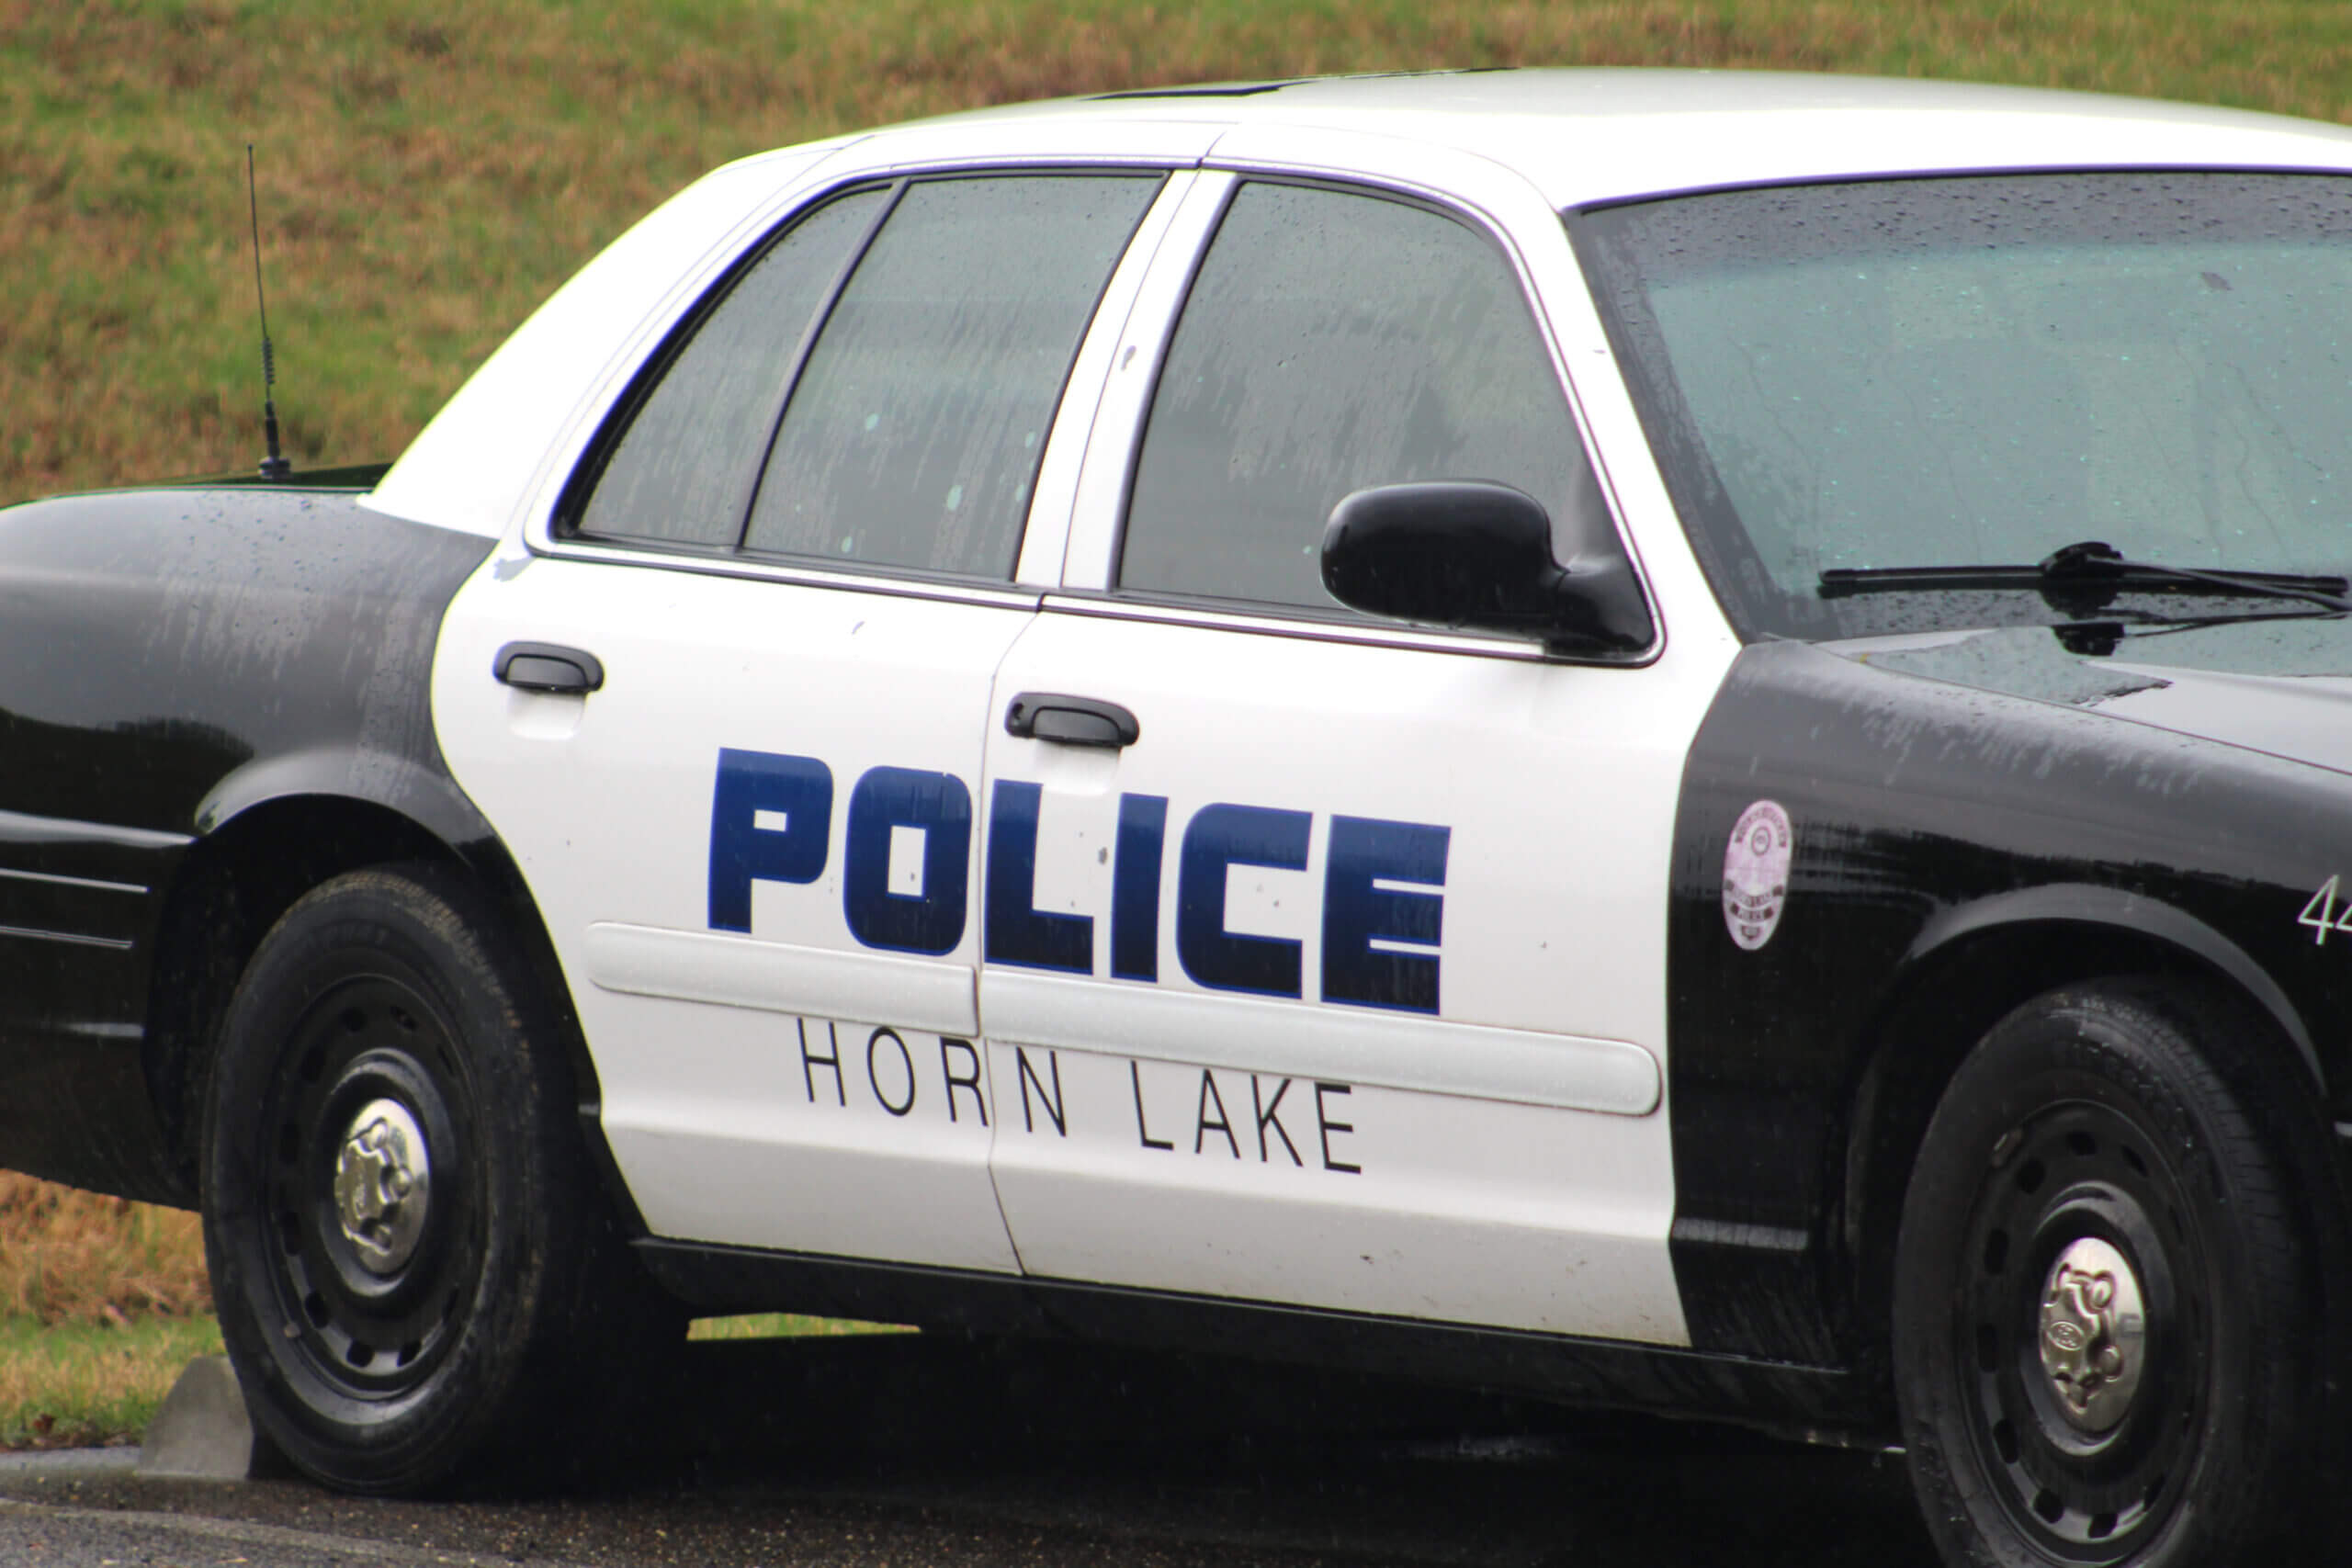 Police investigate Horn Lake Walmart robbery